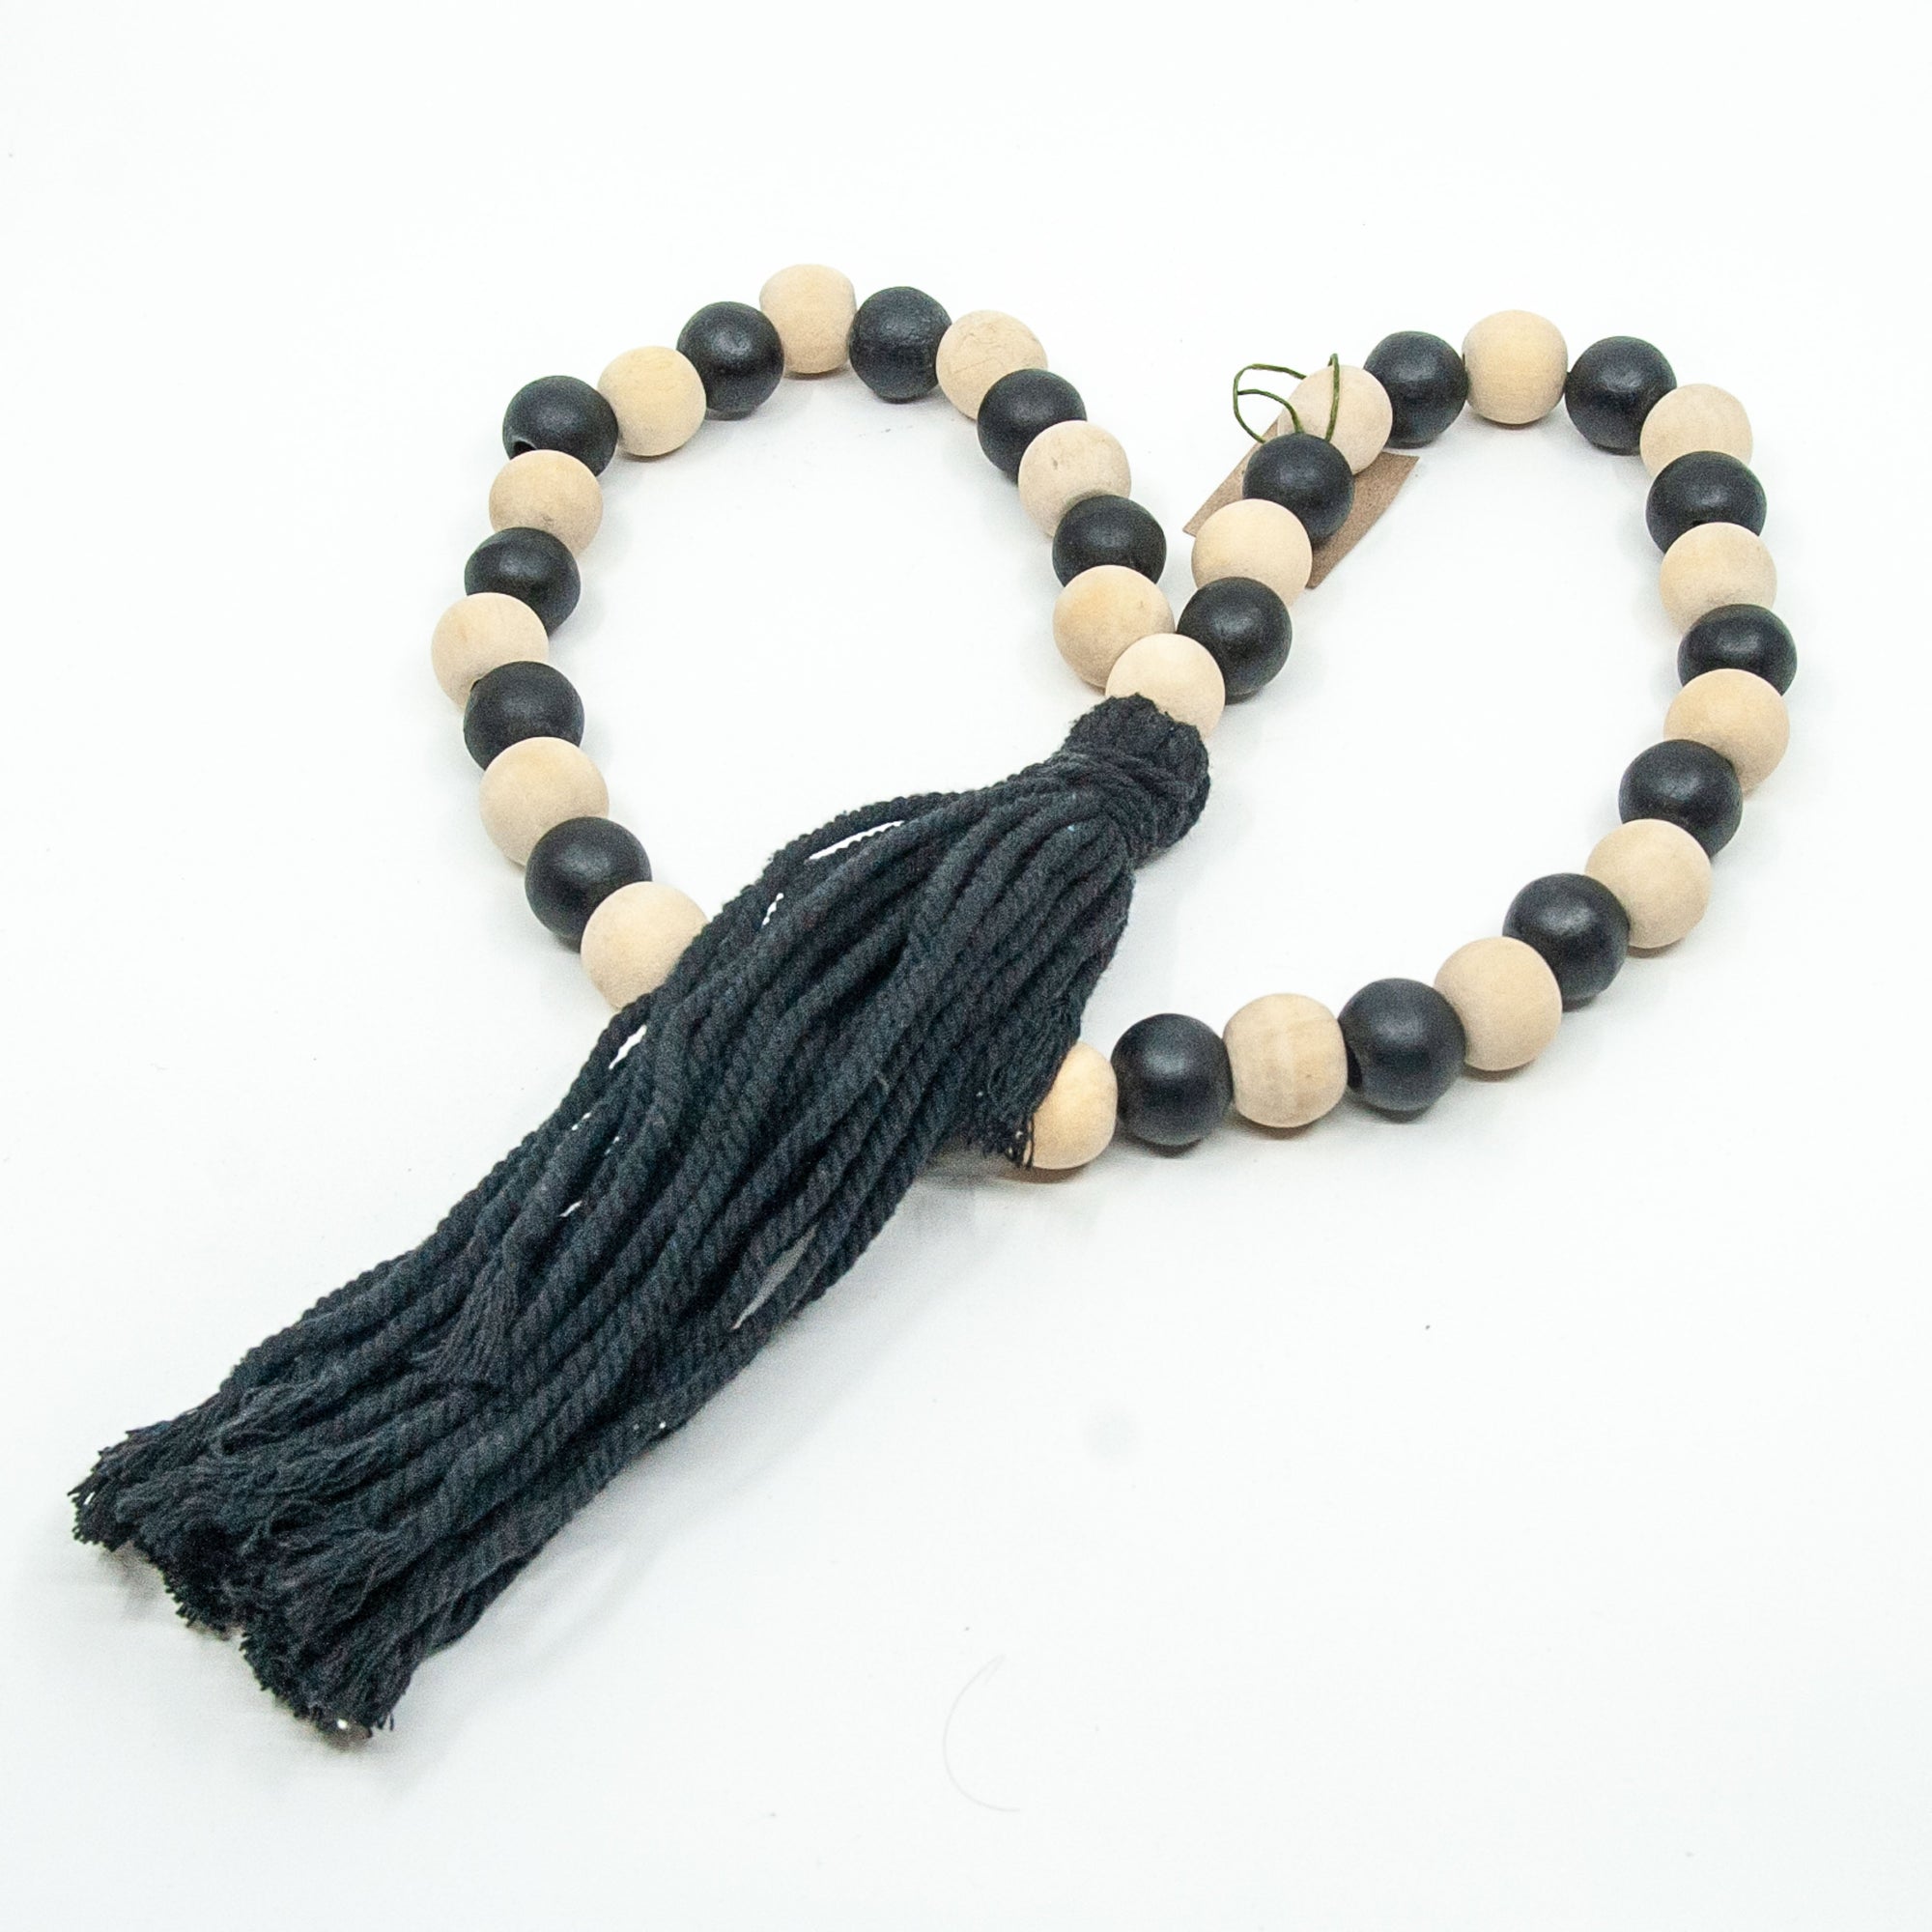 Decorative Beads (20mm)- Black and White Tassel